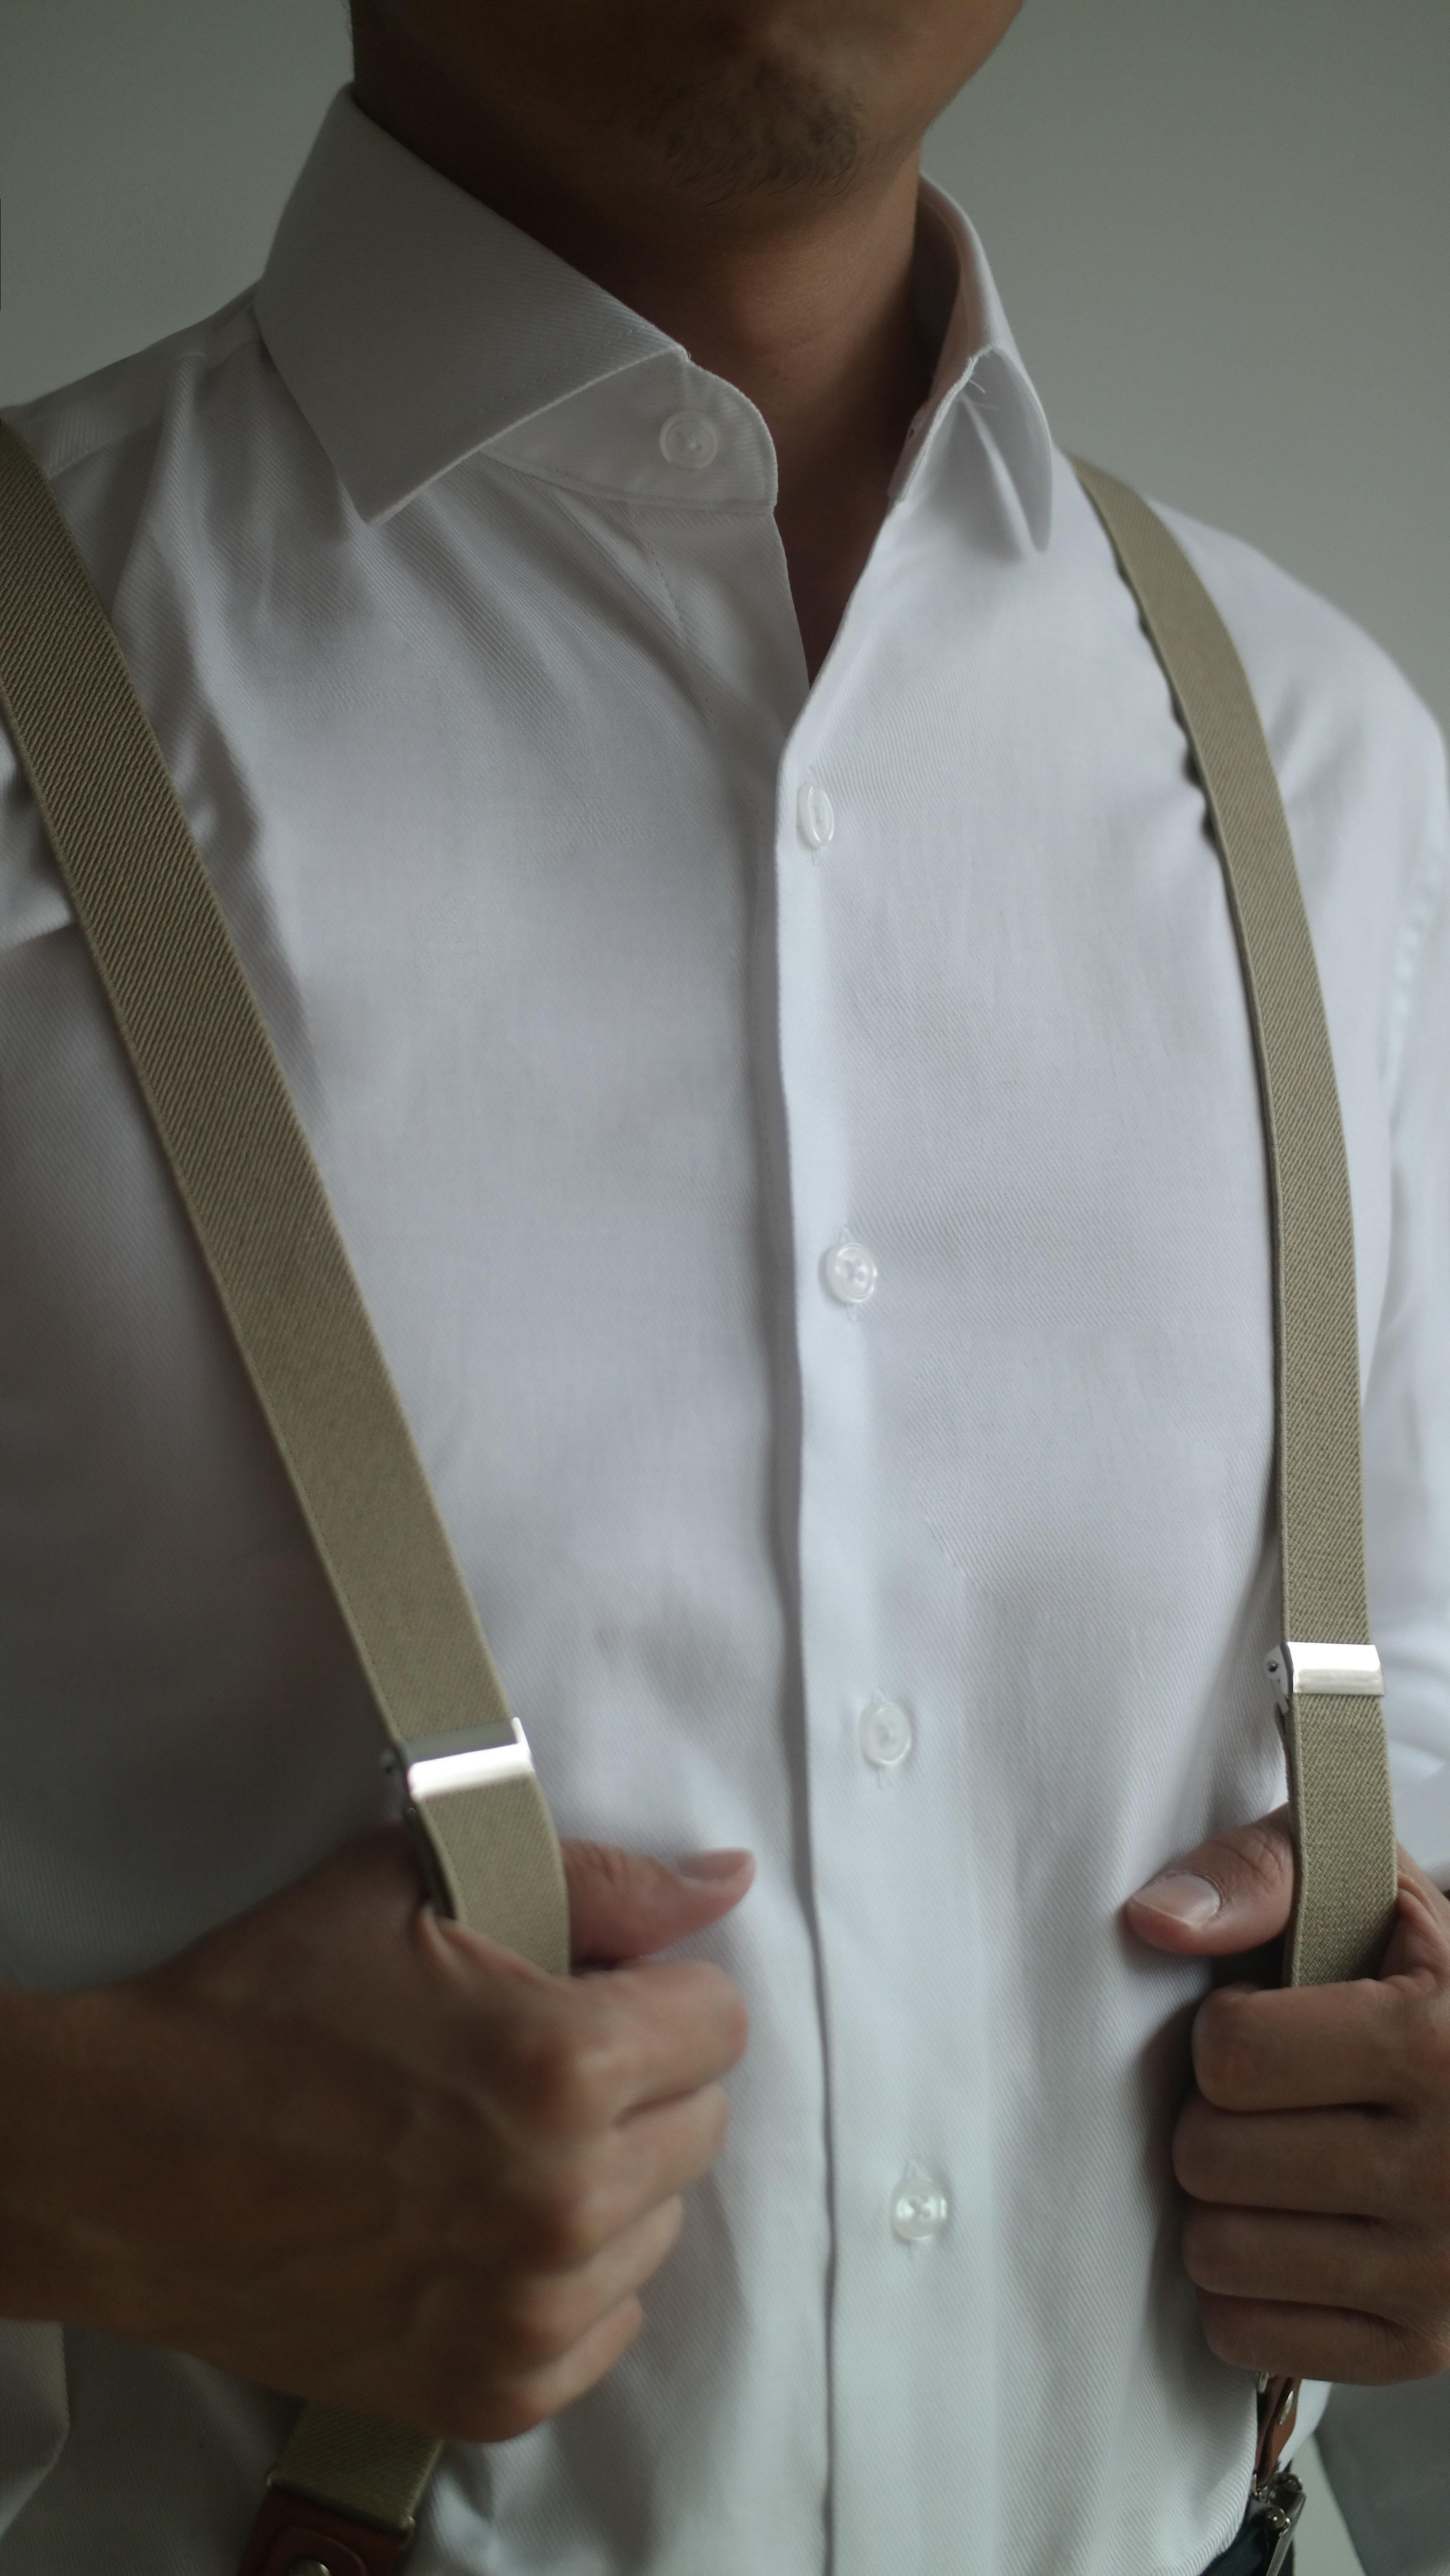 4 Prong Clip-On Suspenders - (Khaki) - Assemble Singapore